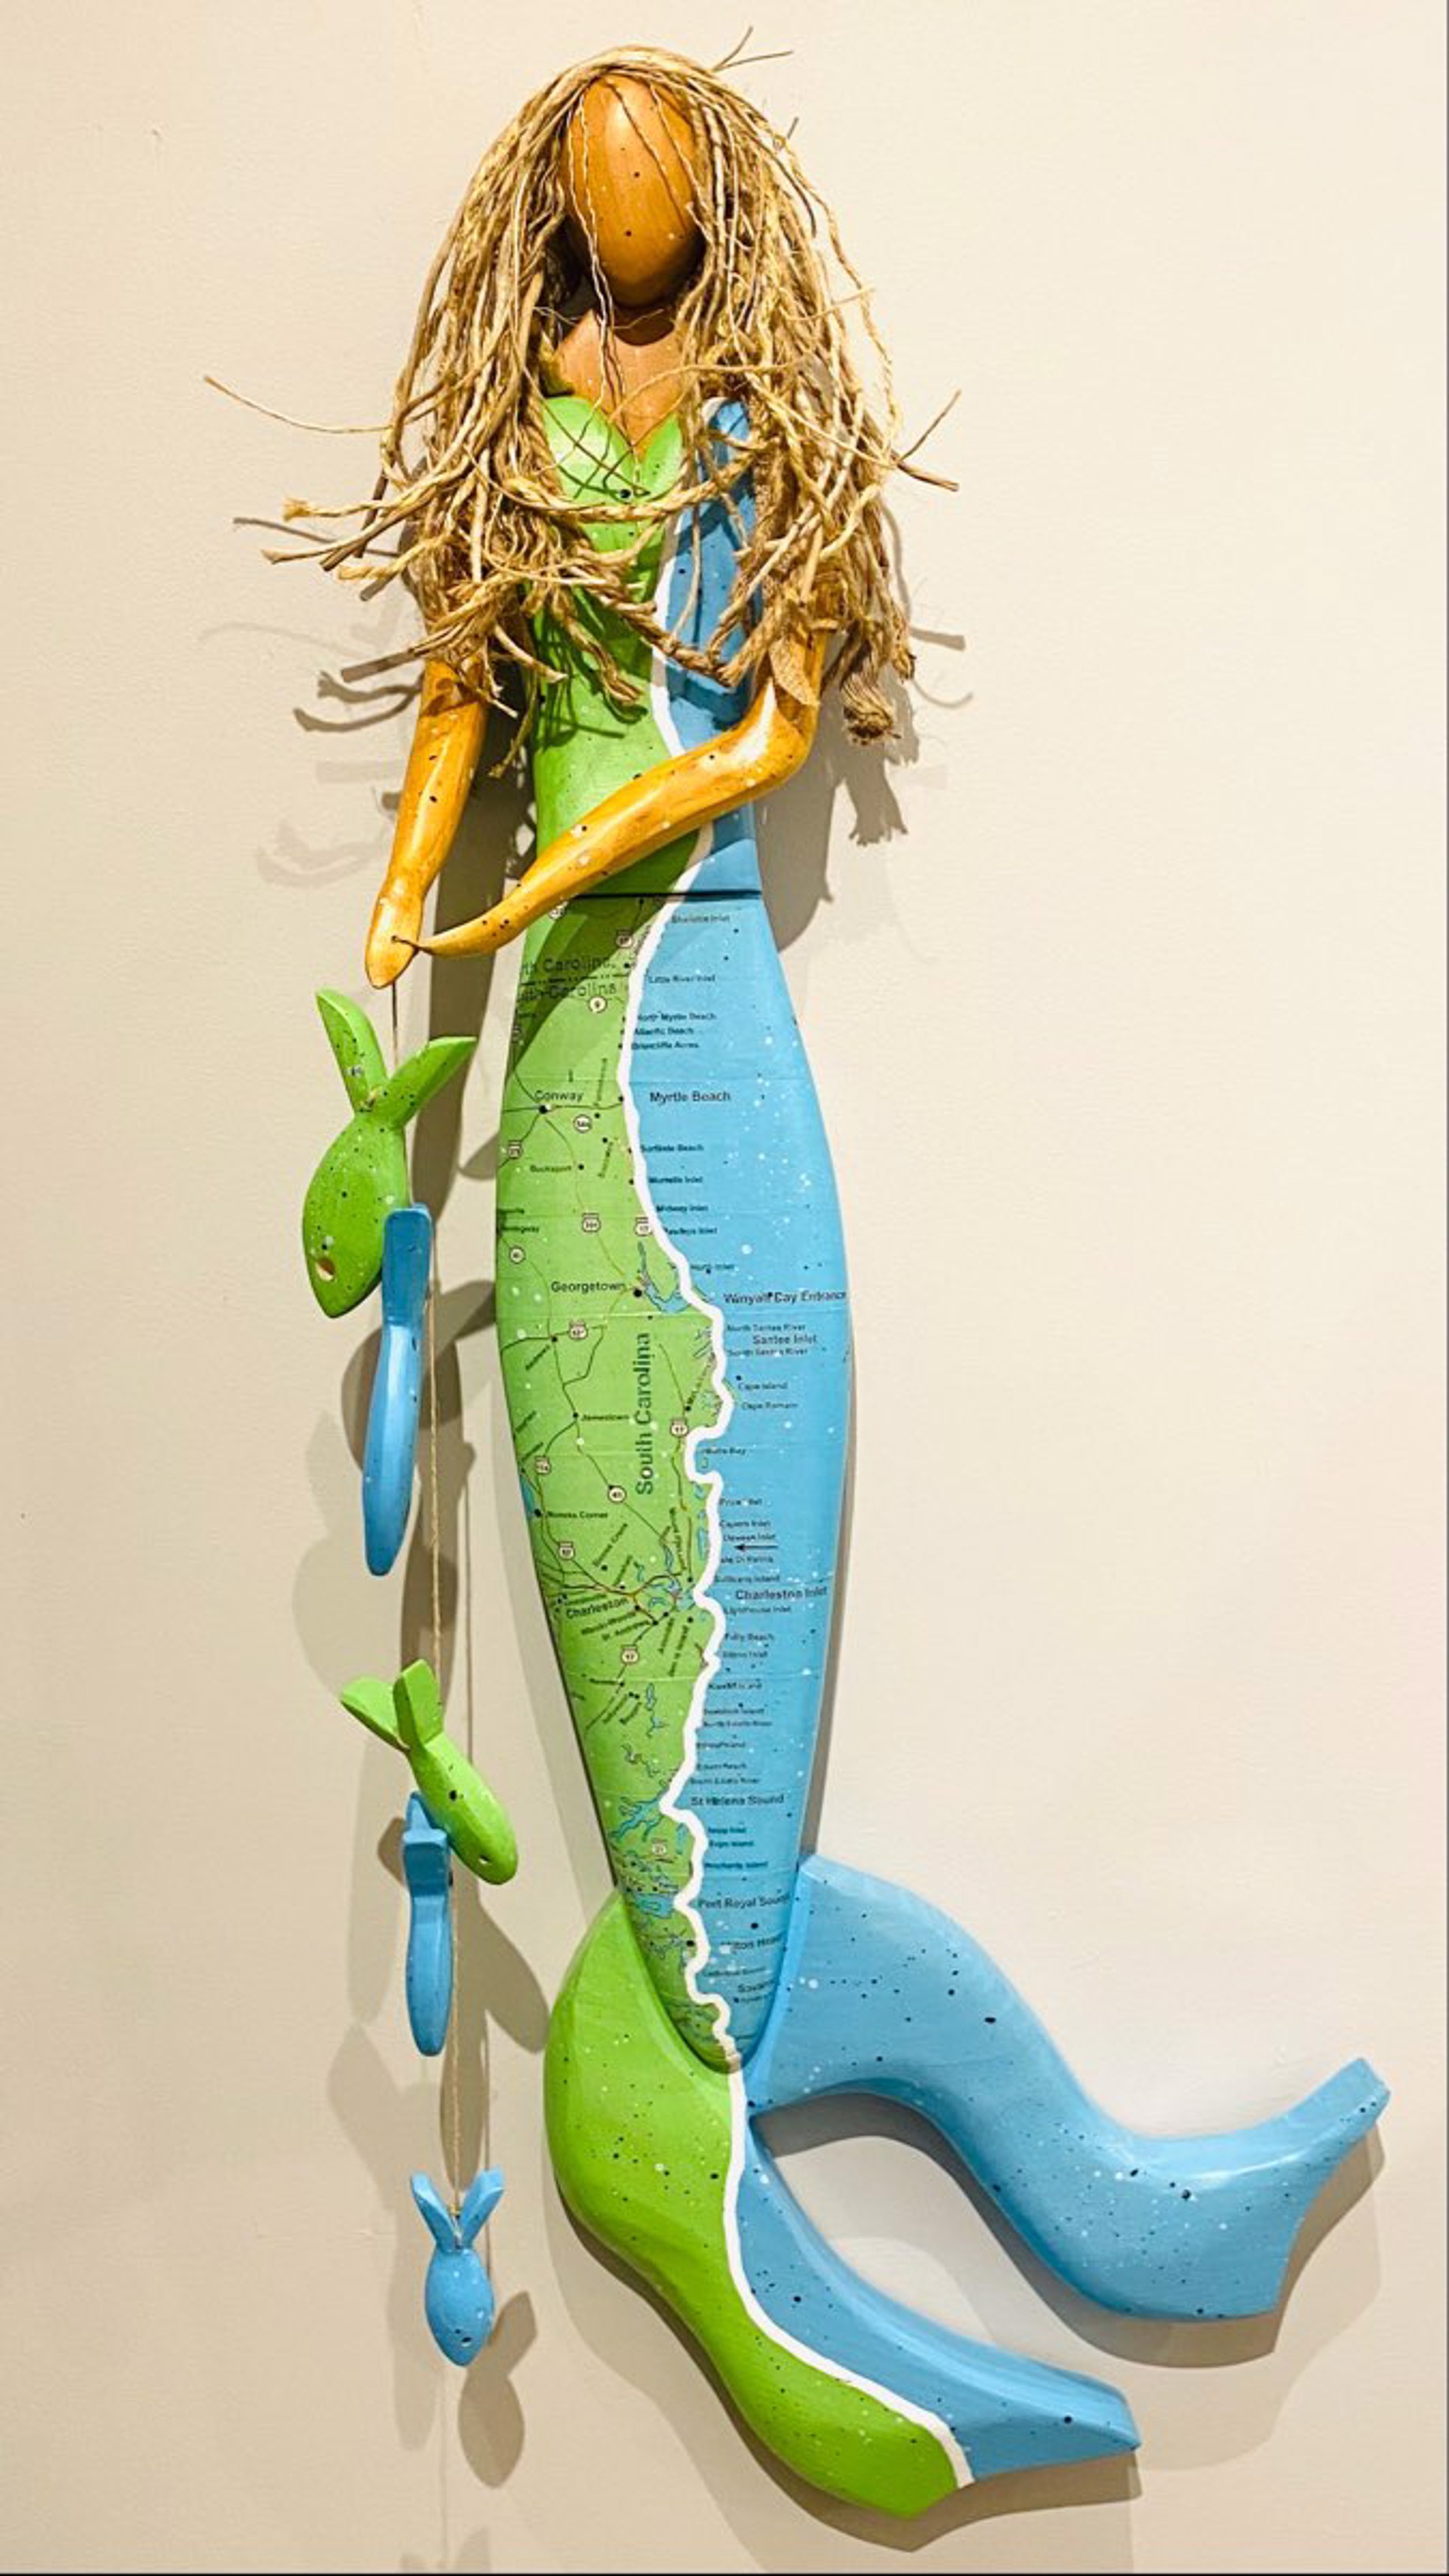 JW22-83 "Carolina SHEShore "Mermaid by Jo Watson